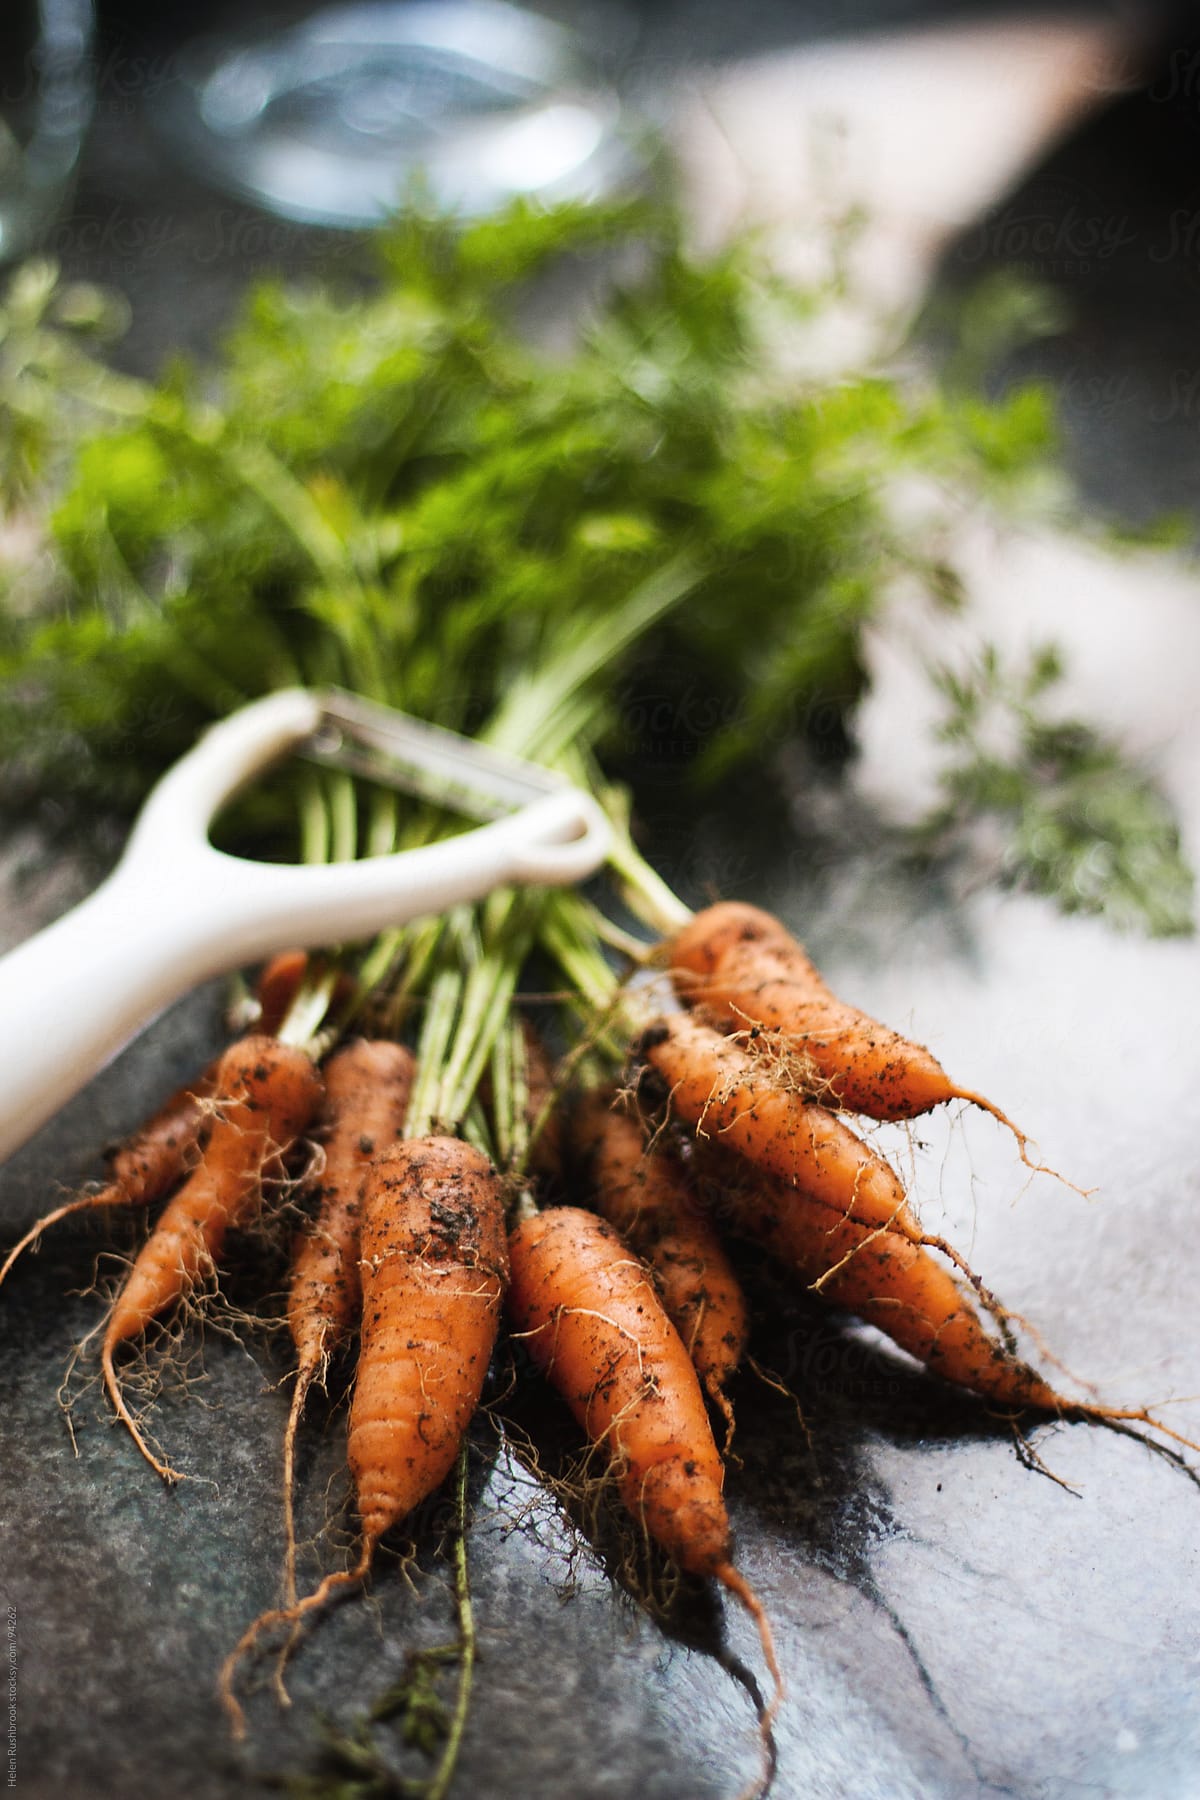 Freshly dug carrots with a vegetable peeler